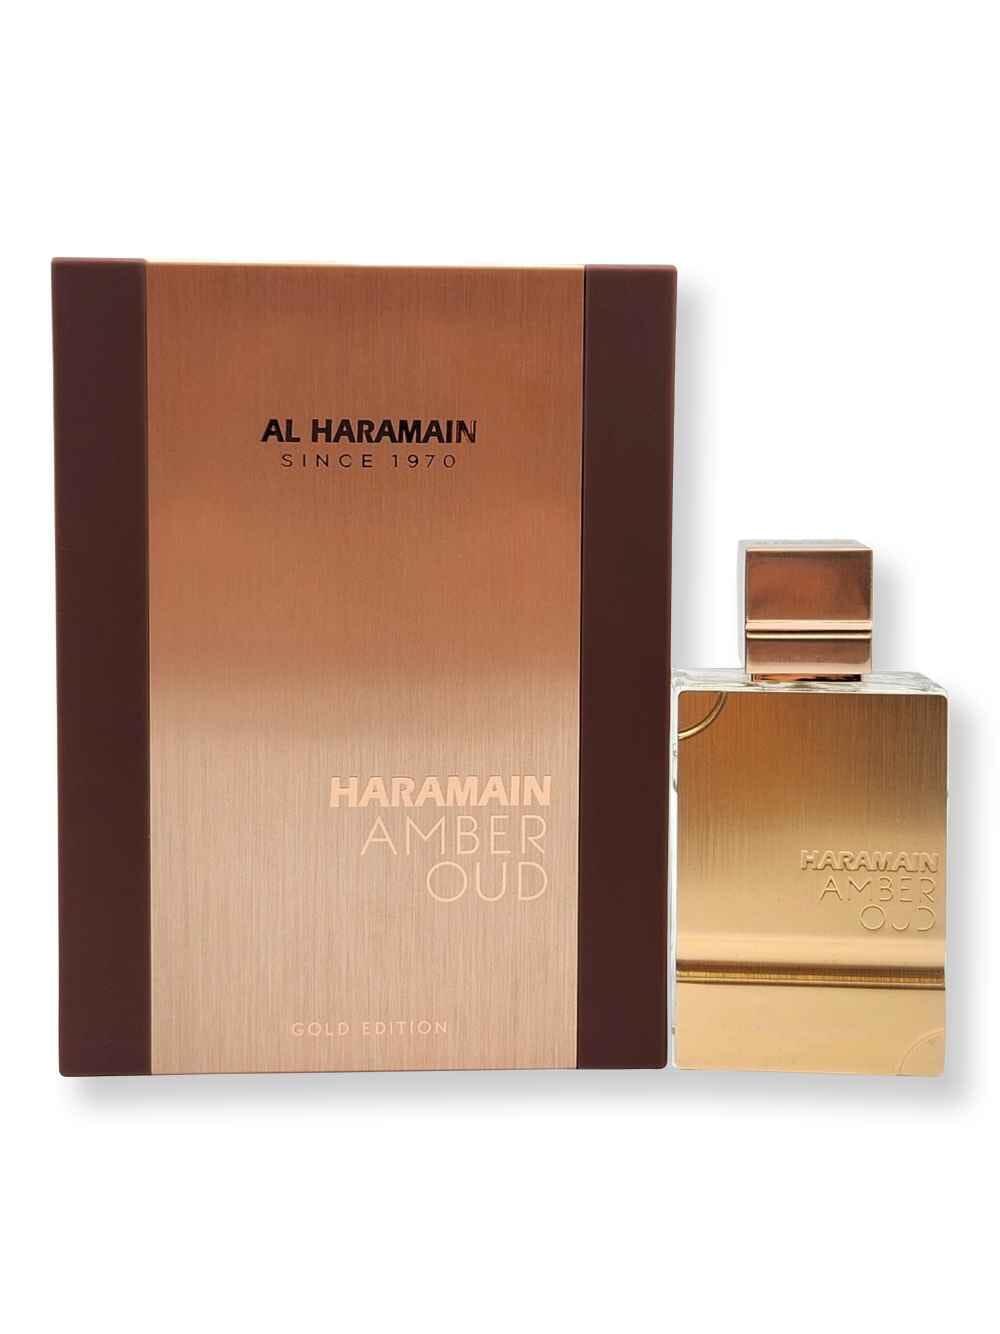 Al Haramain Al Haramain Amber Oud Gold Edition EDP Spray 60 ml Perfume 